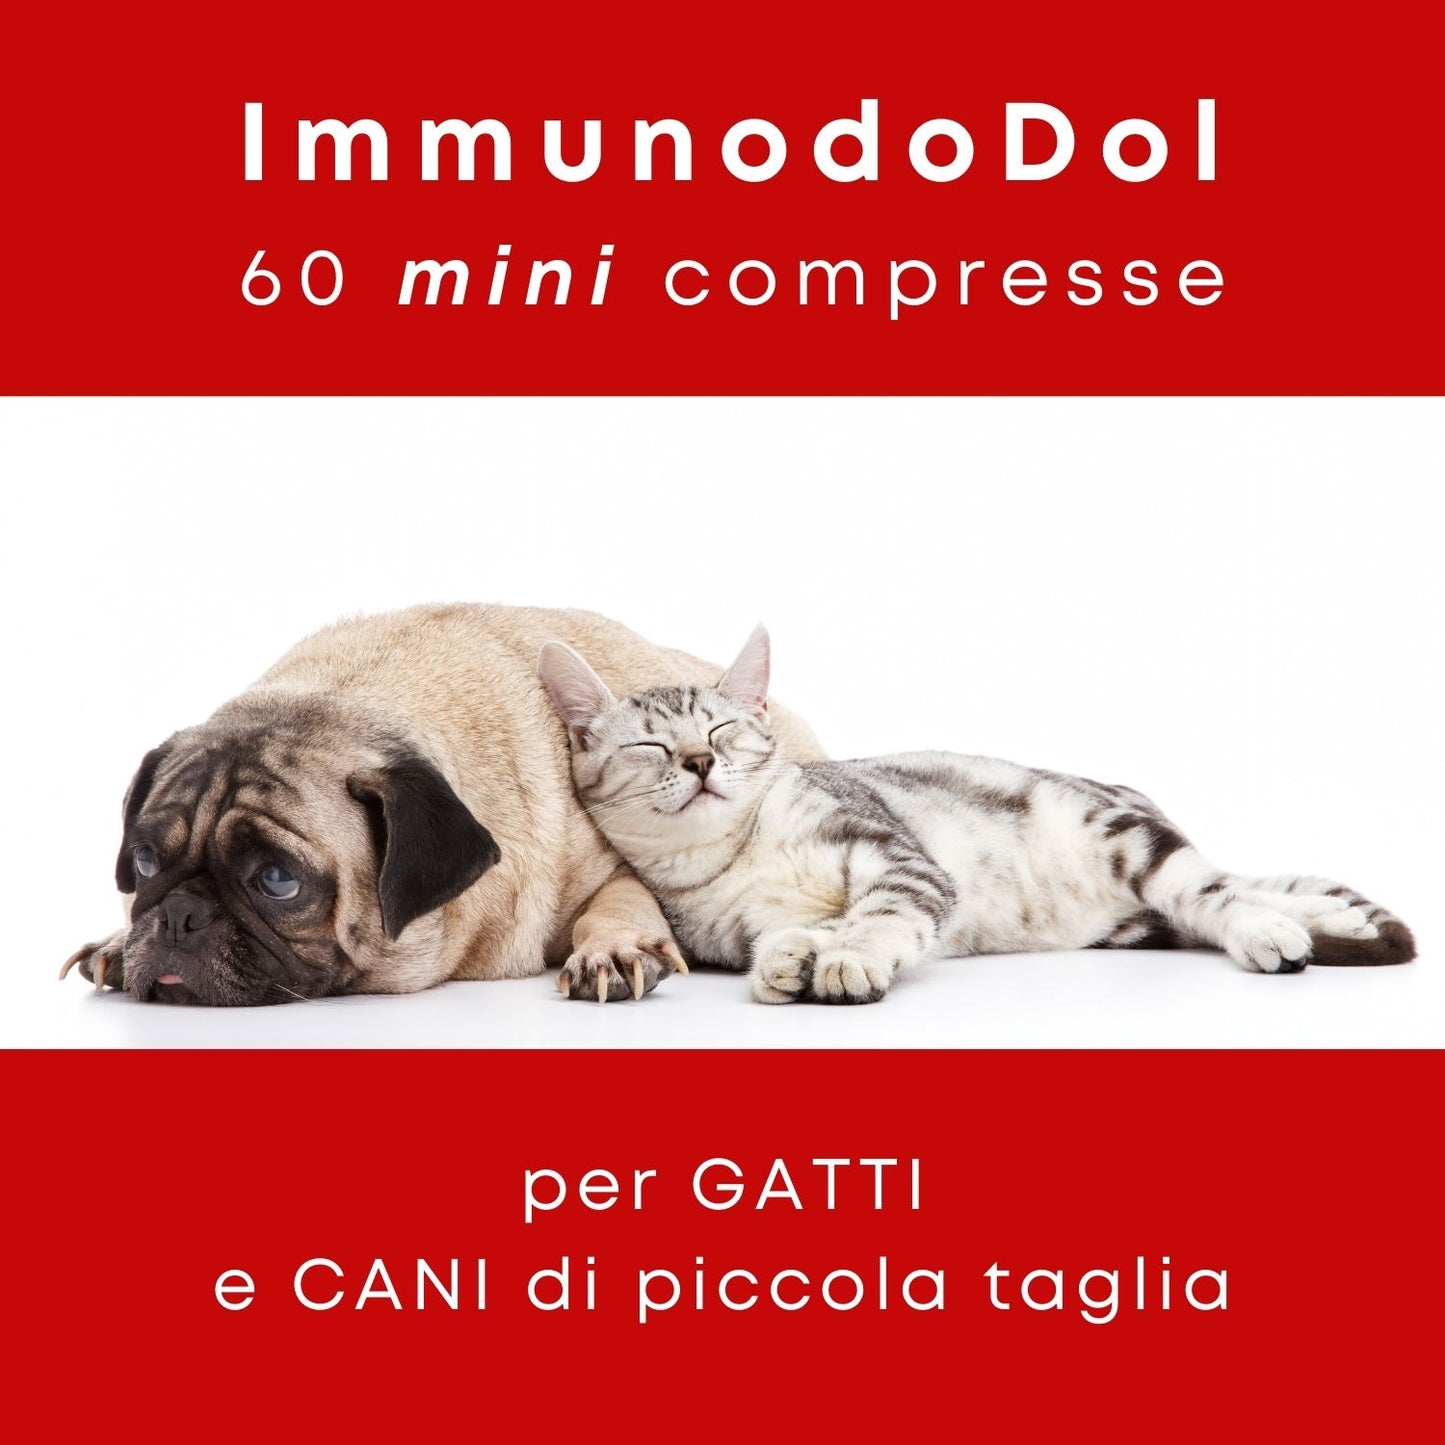 ImmunoDol e Immunodol mini